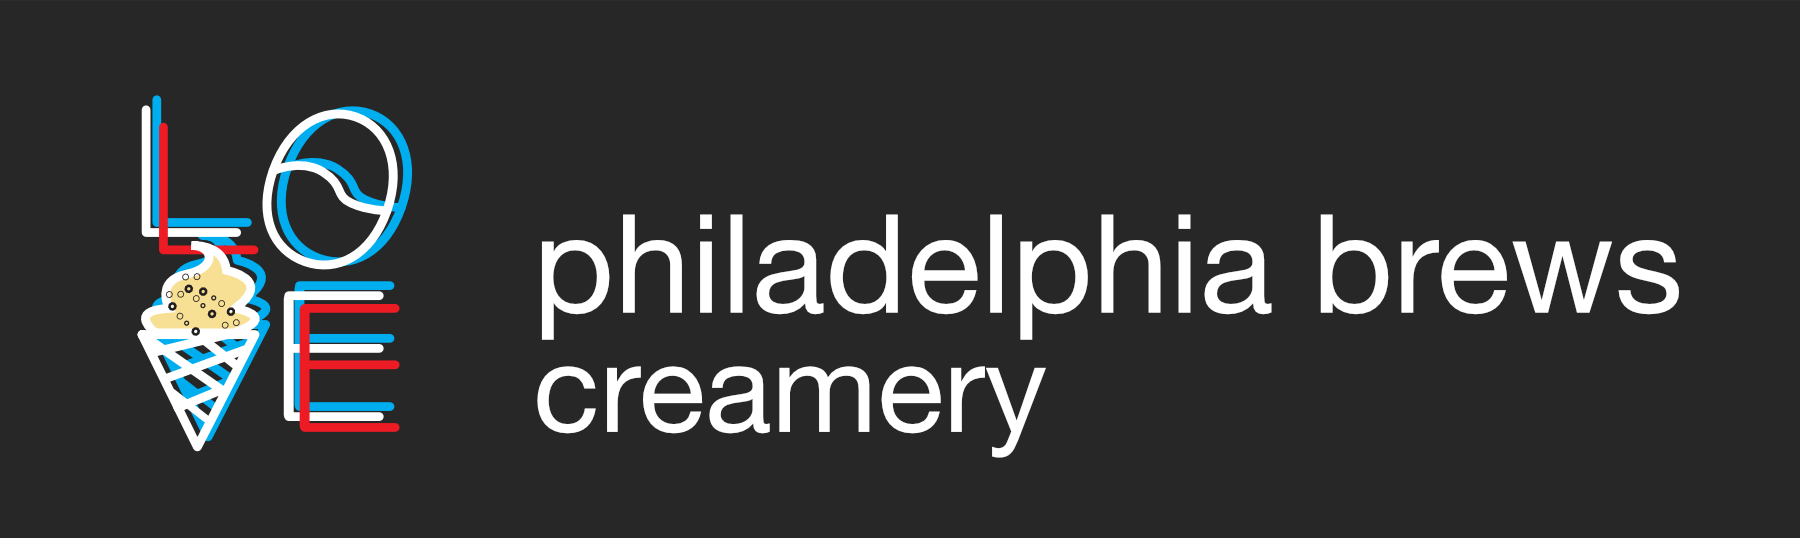 Philadelphia Brews Creamery